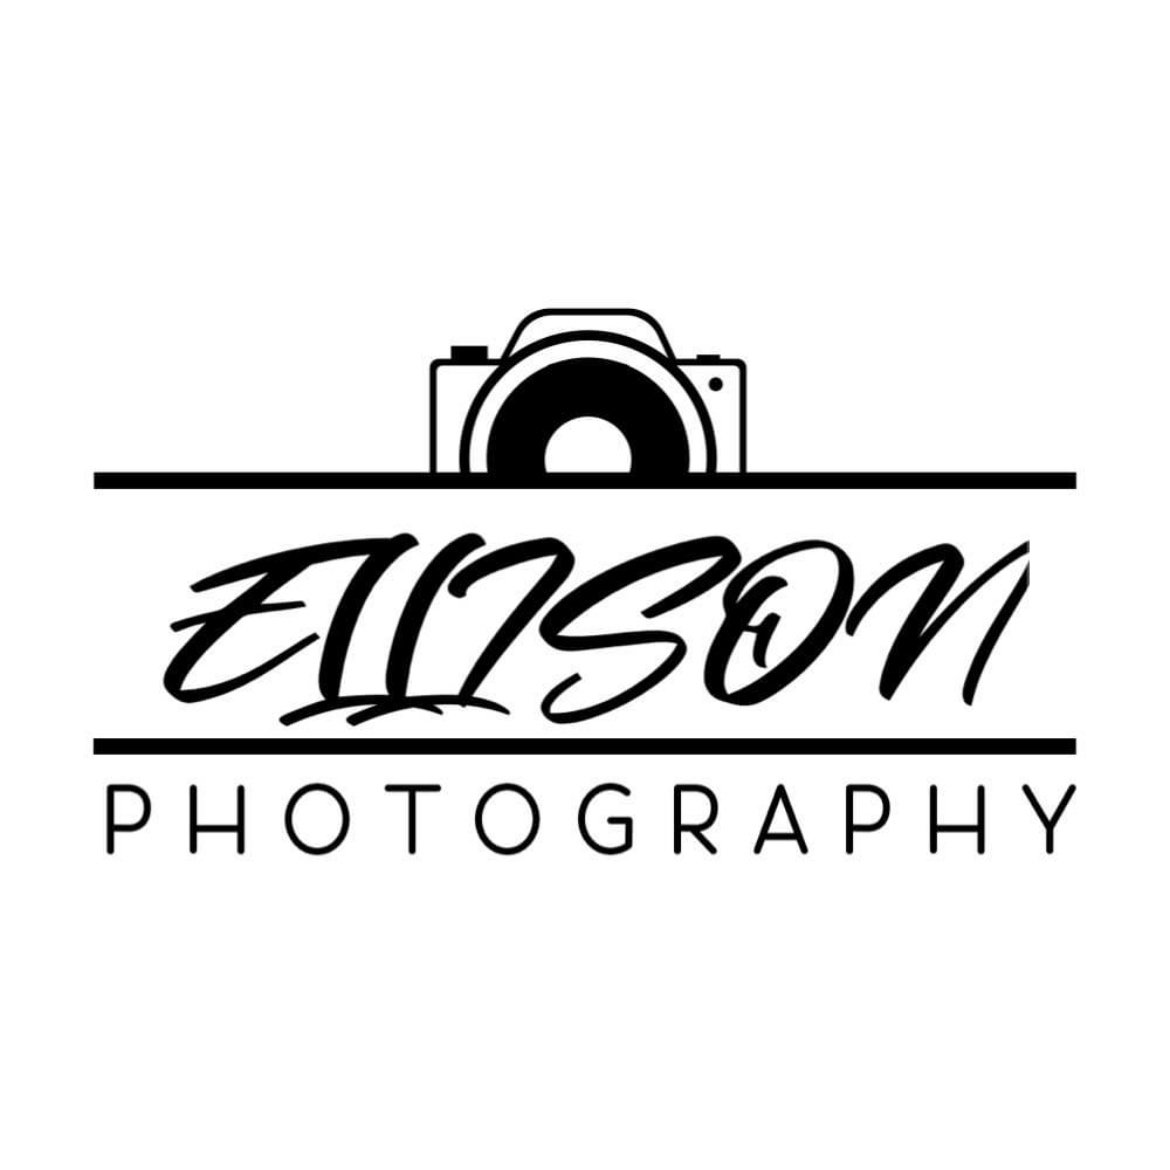 Ellison Photography 